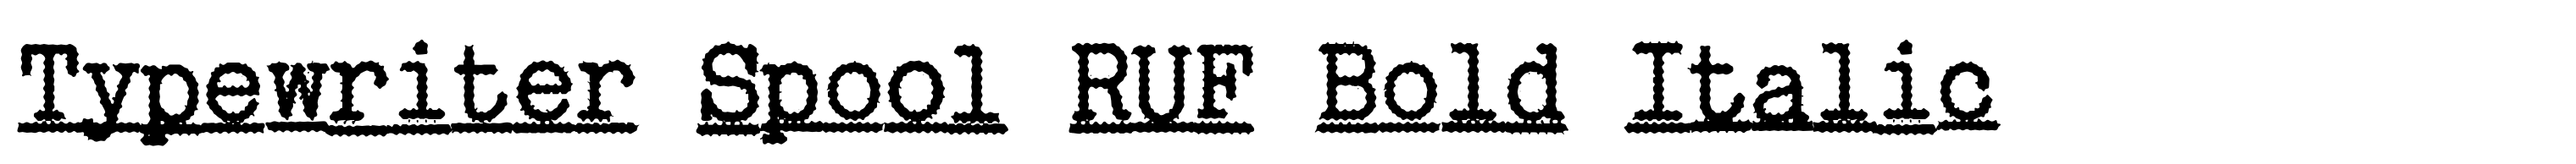 Typewriter Spool RUF Bold Italic